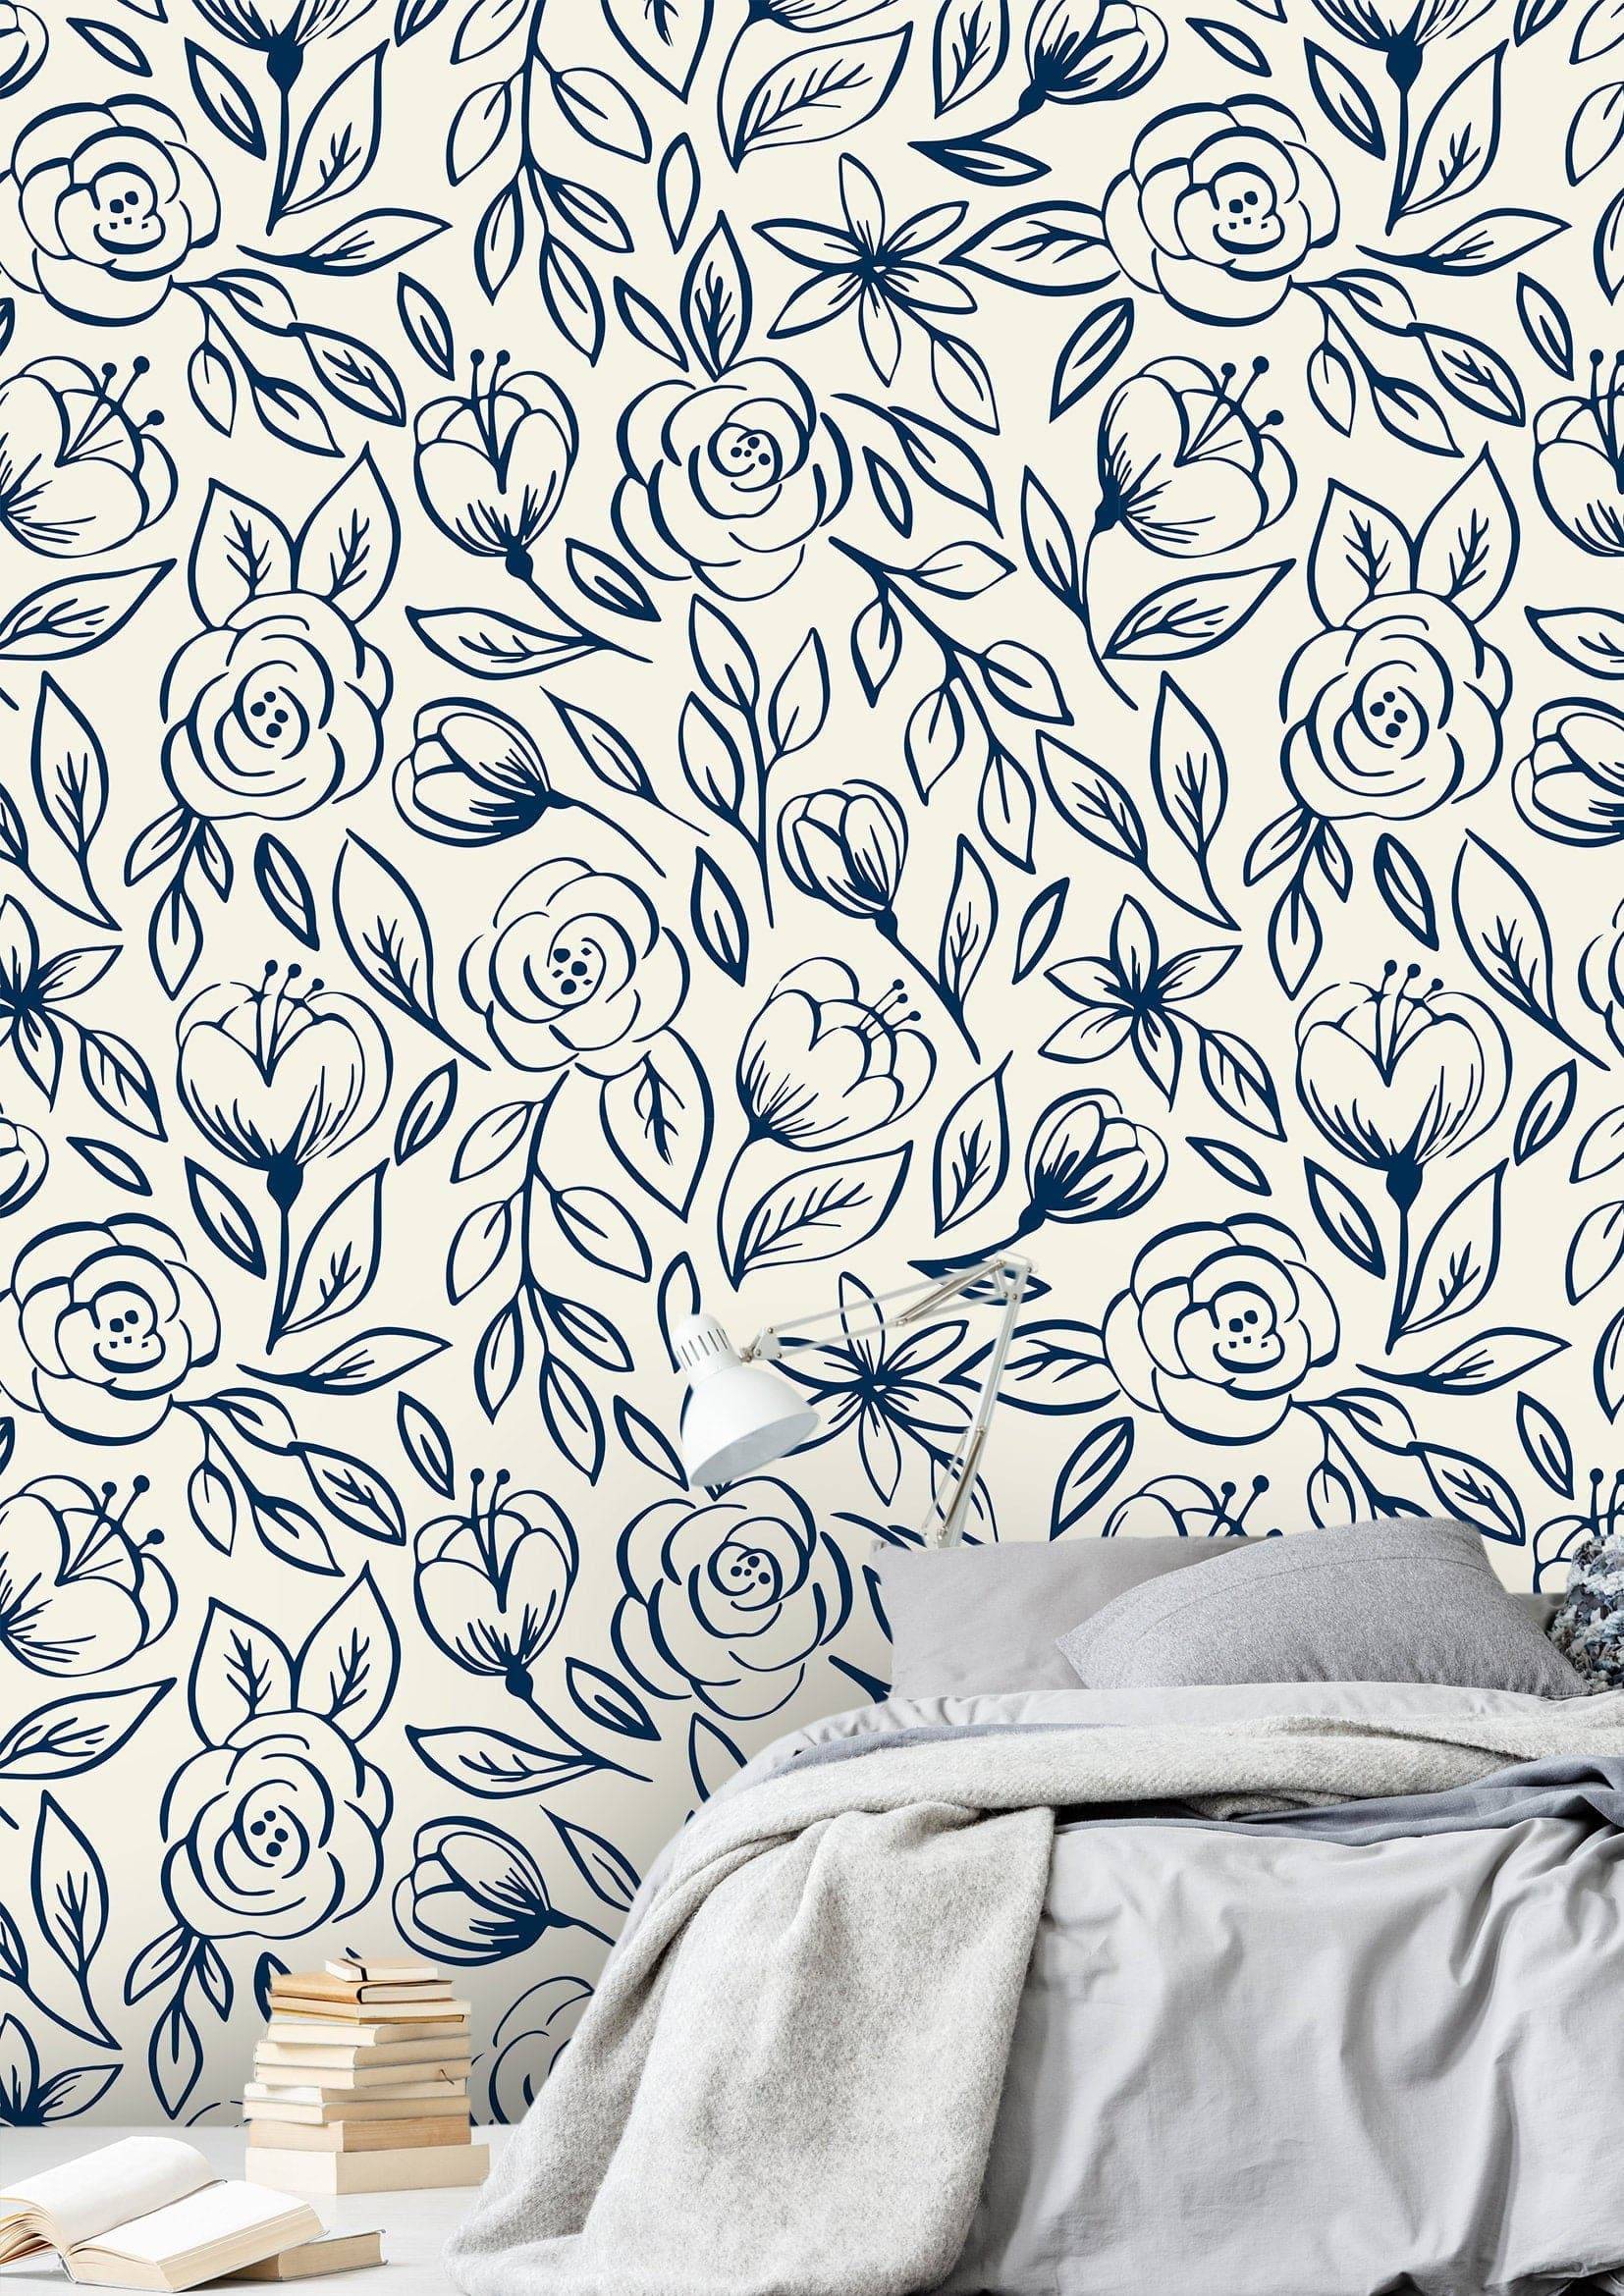 Navy Rose Floral Wallpaper | Removable Wallpaper | Peel And Stick Wallpaper | Adhesive Wallpaper | Wall Paper Peel Stick Wall Mural 2361 - JamesAndColors